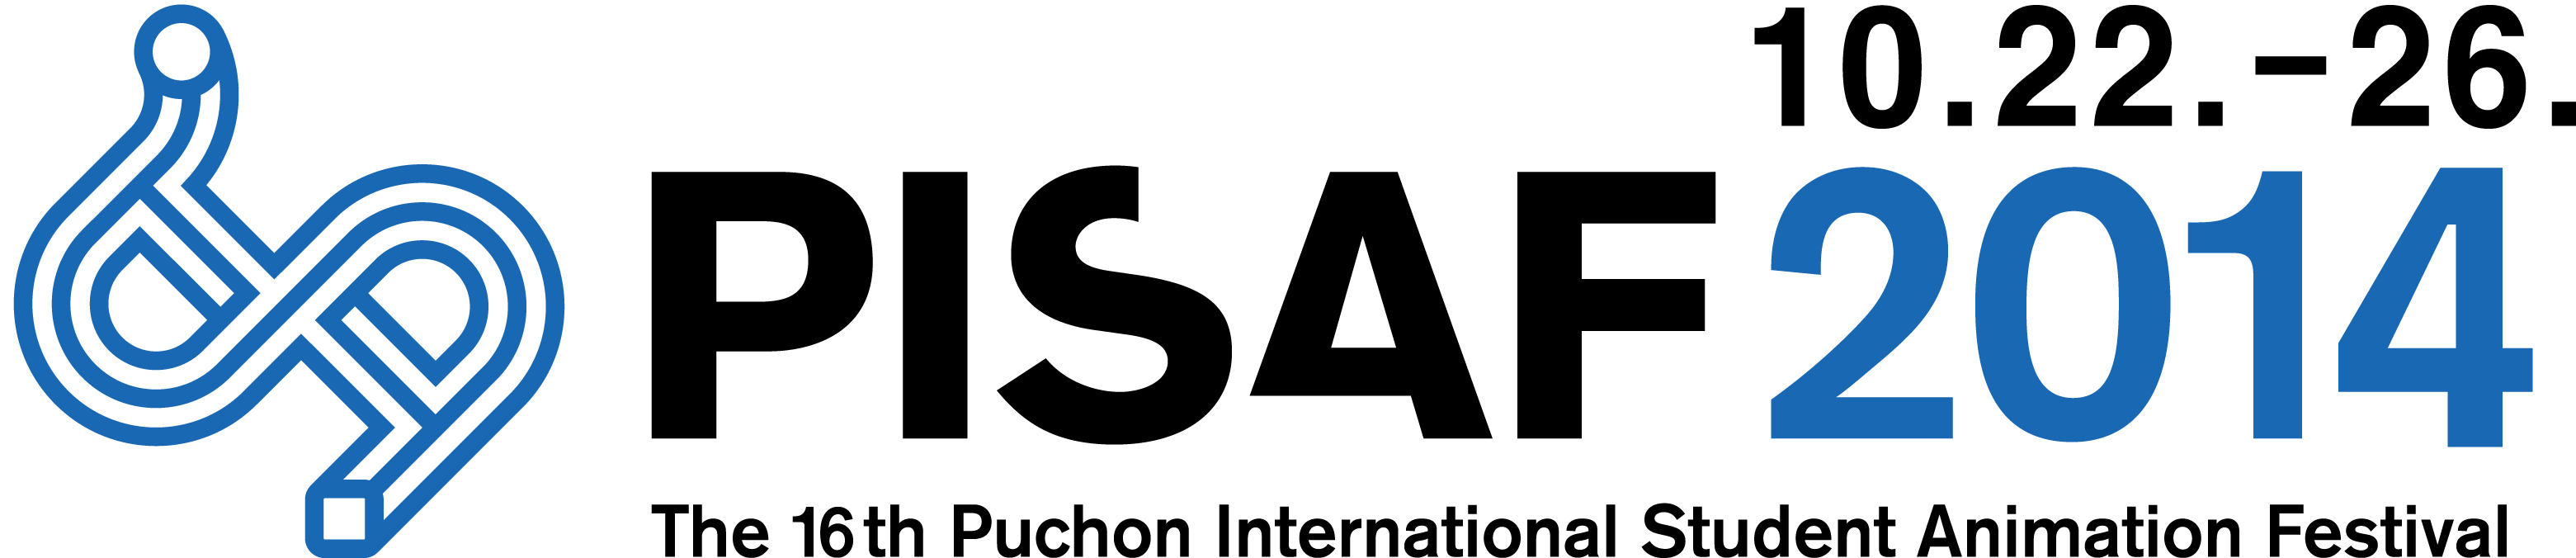 2014_logo